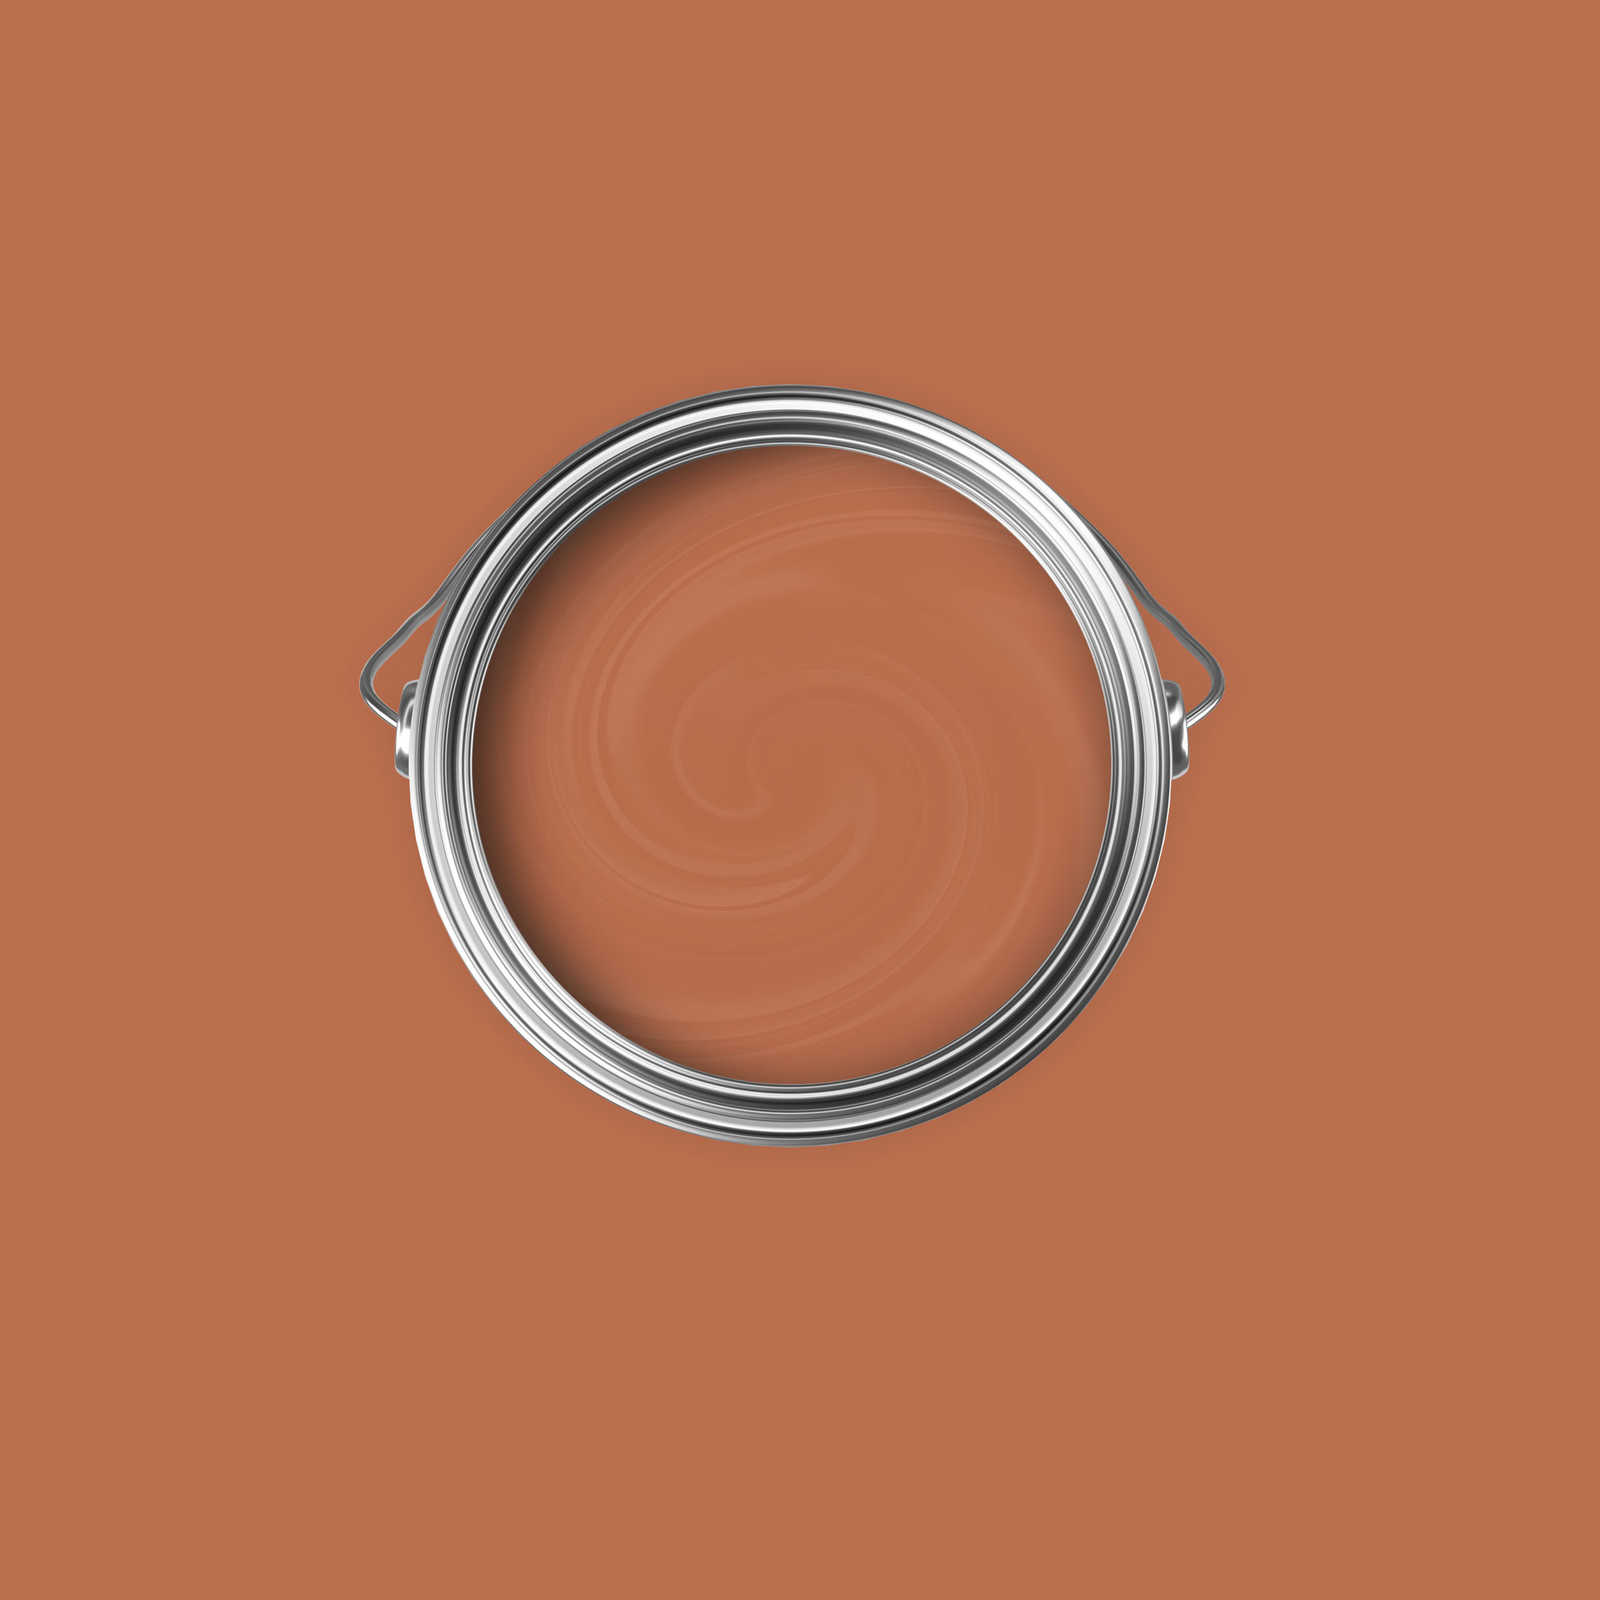             Premium Wall Paint Stimulating Copper »Pretty Peach« NW905 – 2.5 litre
        